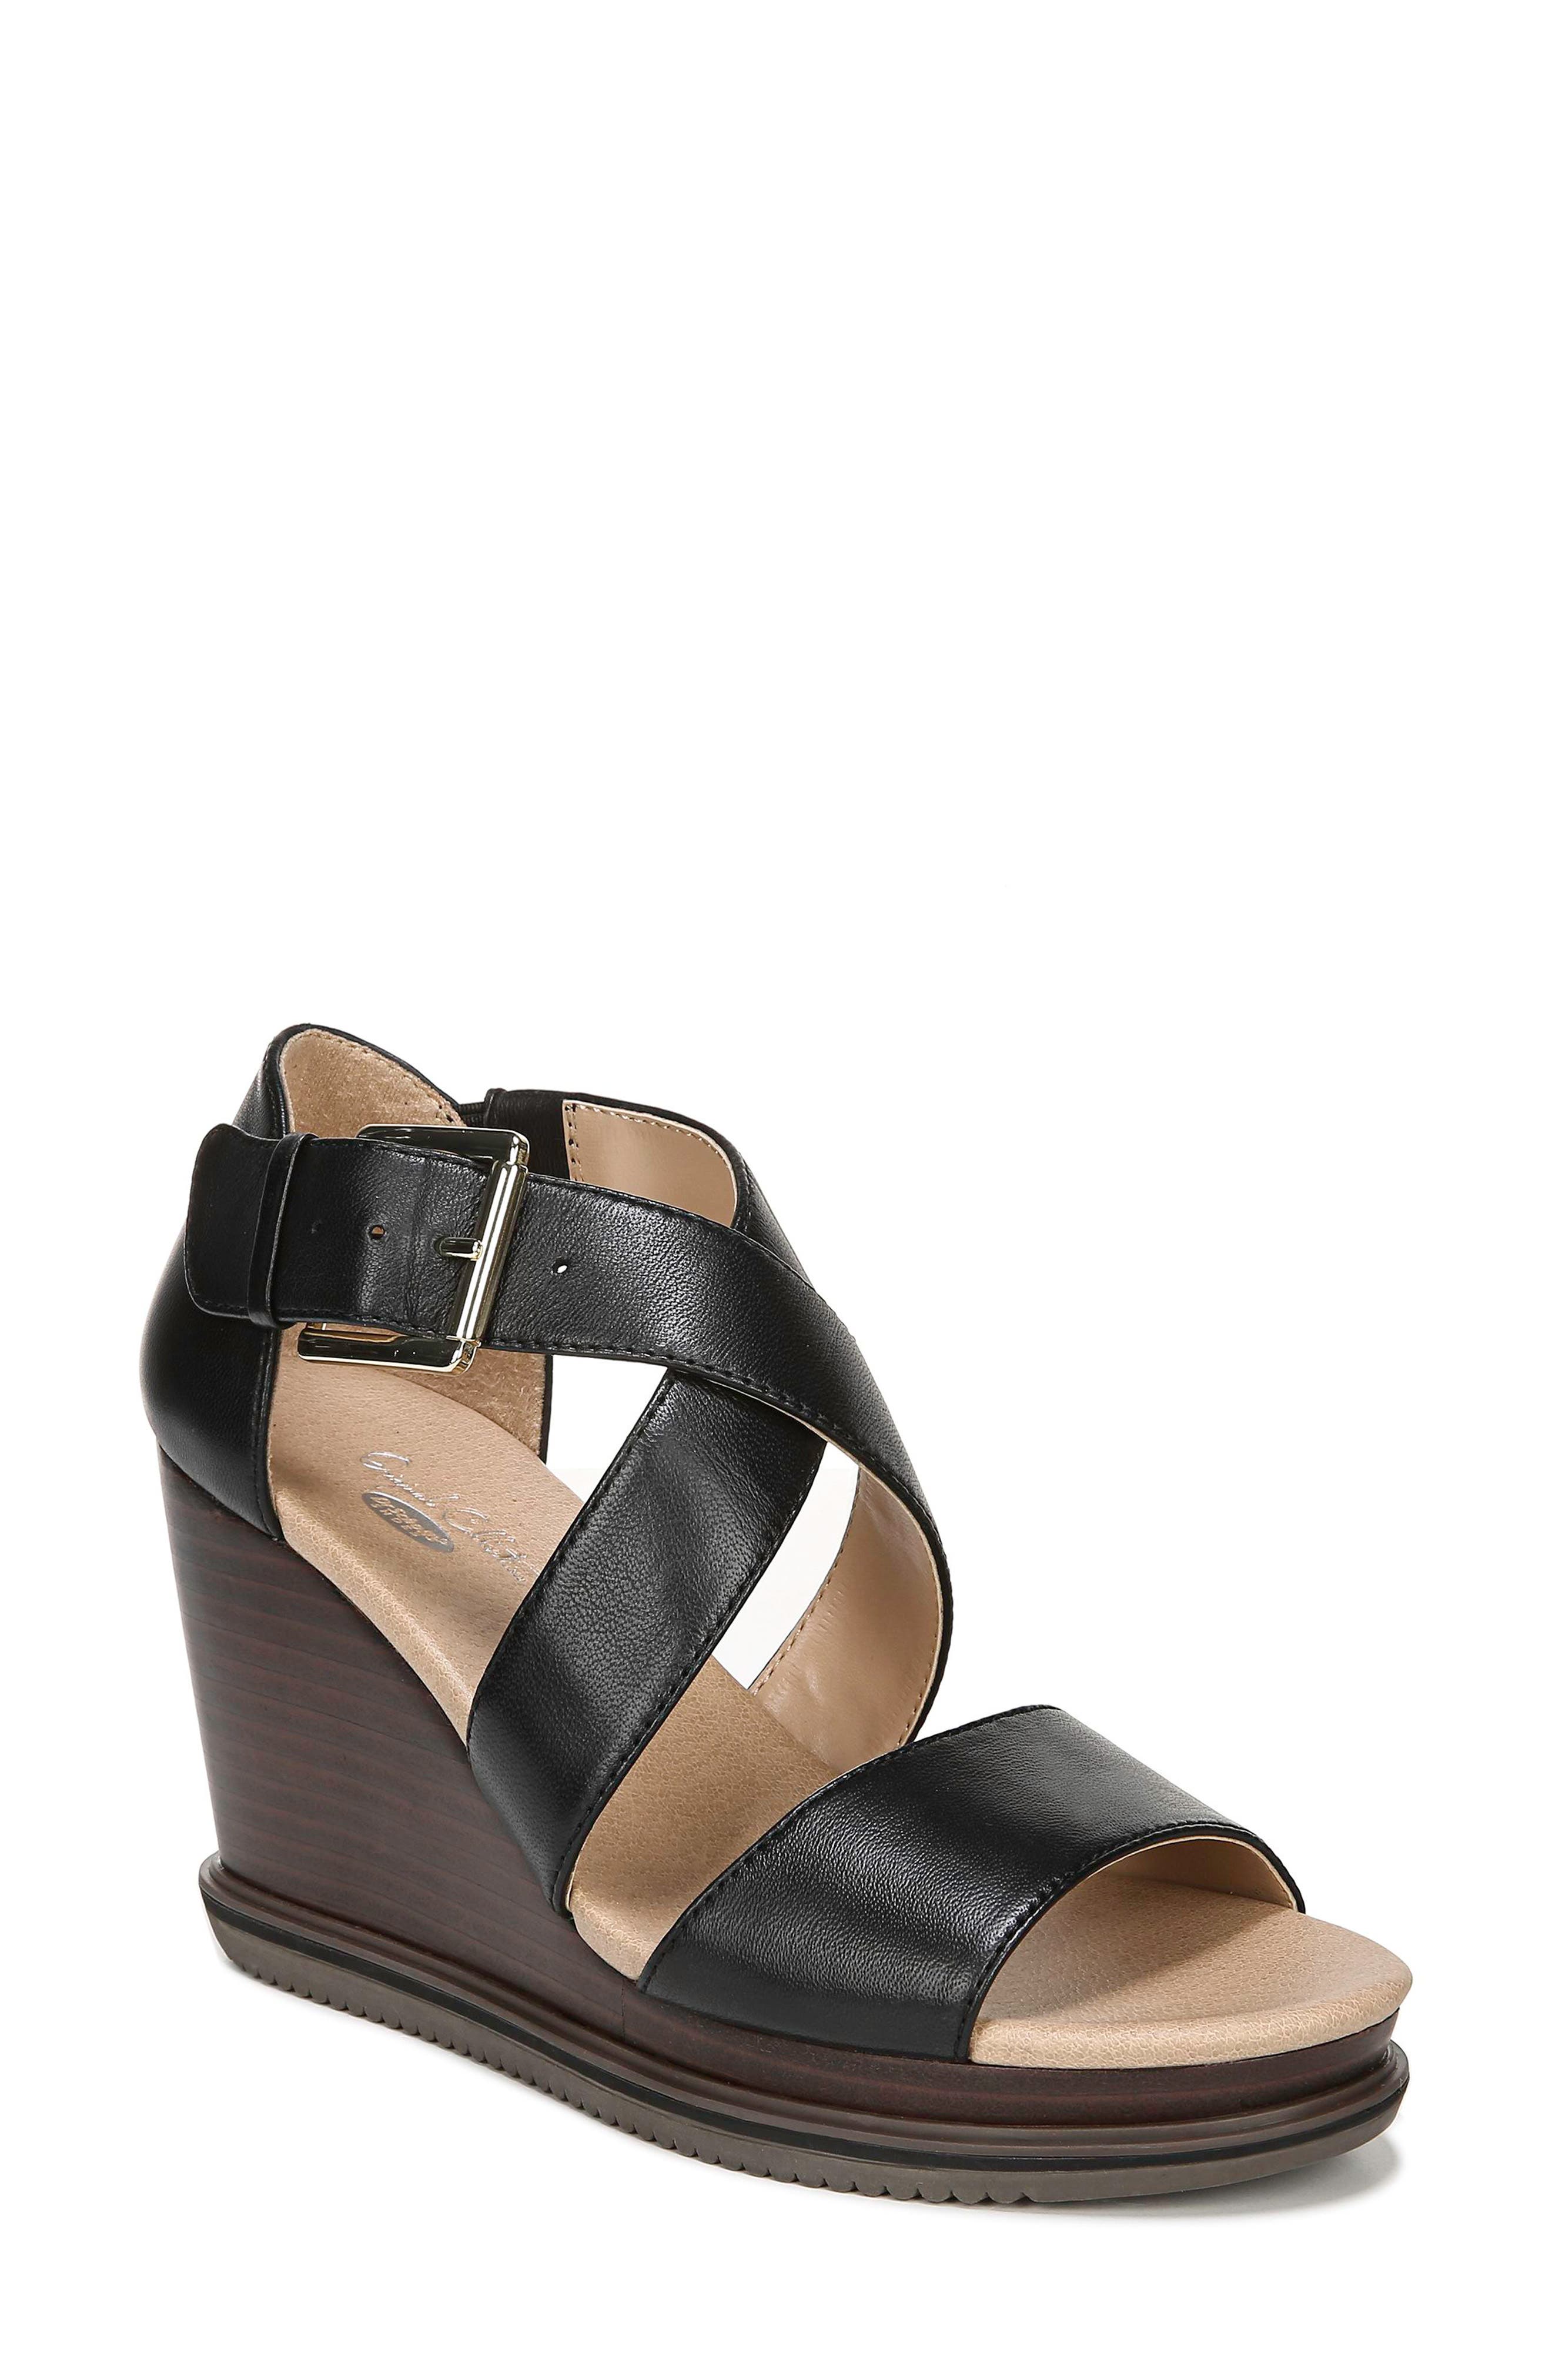 UPC 742976000089 product image for Women's Dr. Scholl's Sweet Escape Wedge Sandal, Size 8 M - Black | upcitemdb.com